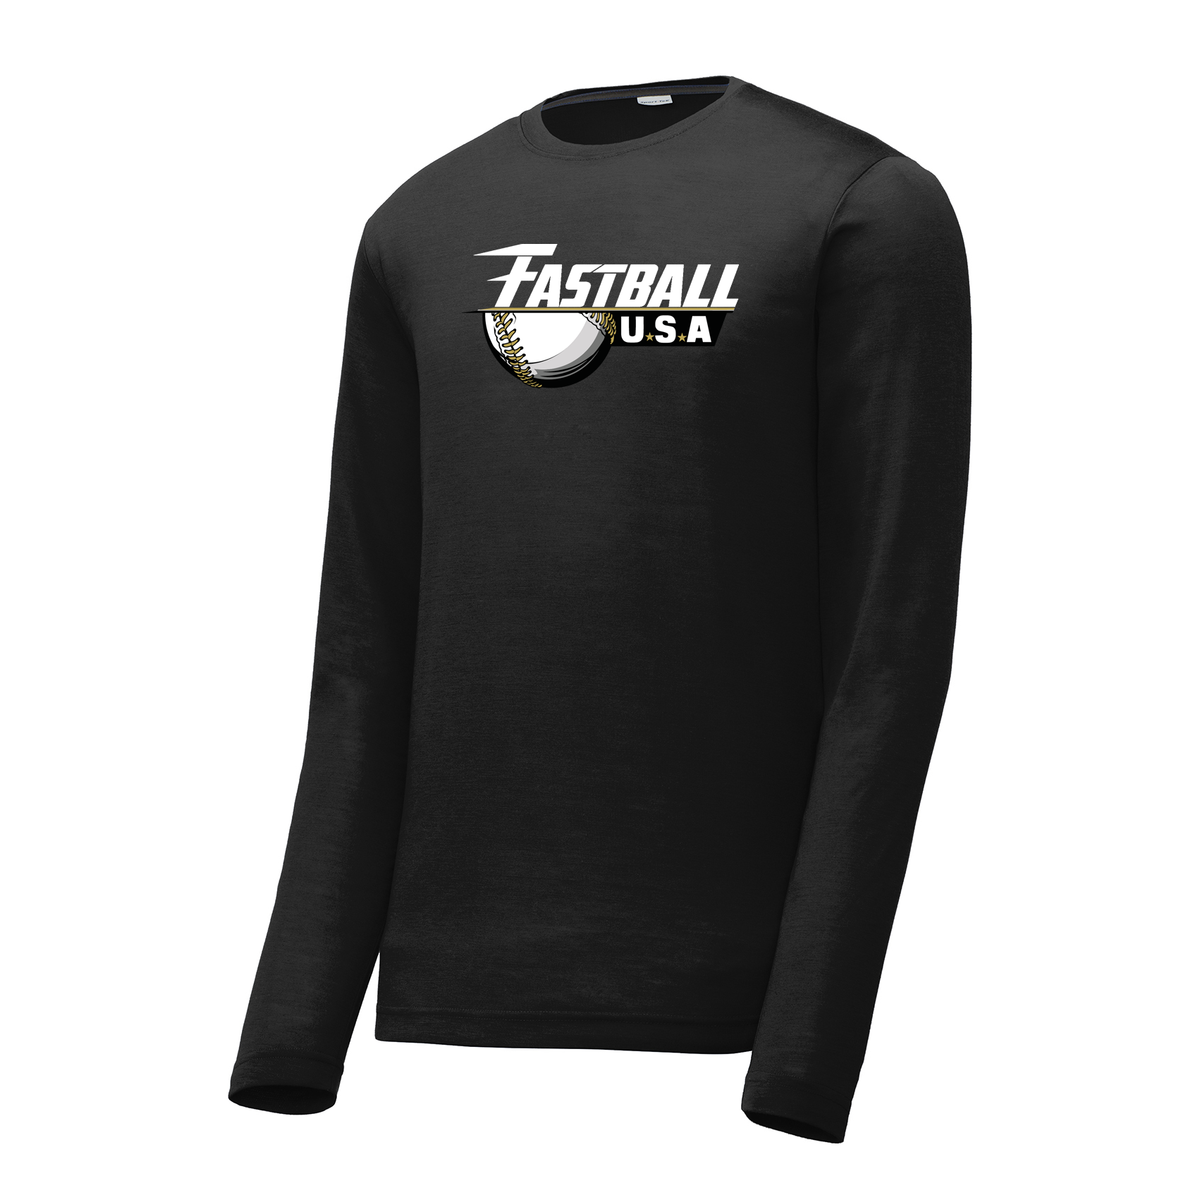 Fastball USA Baseball  Long Sleeve CottonTouch Performance Shirt